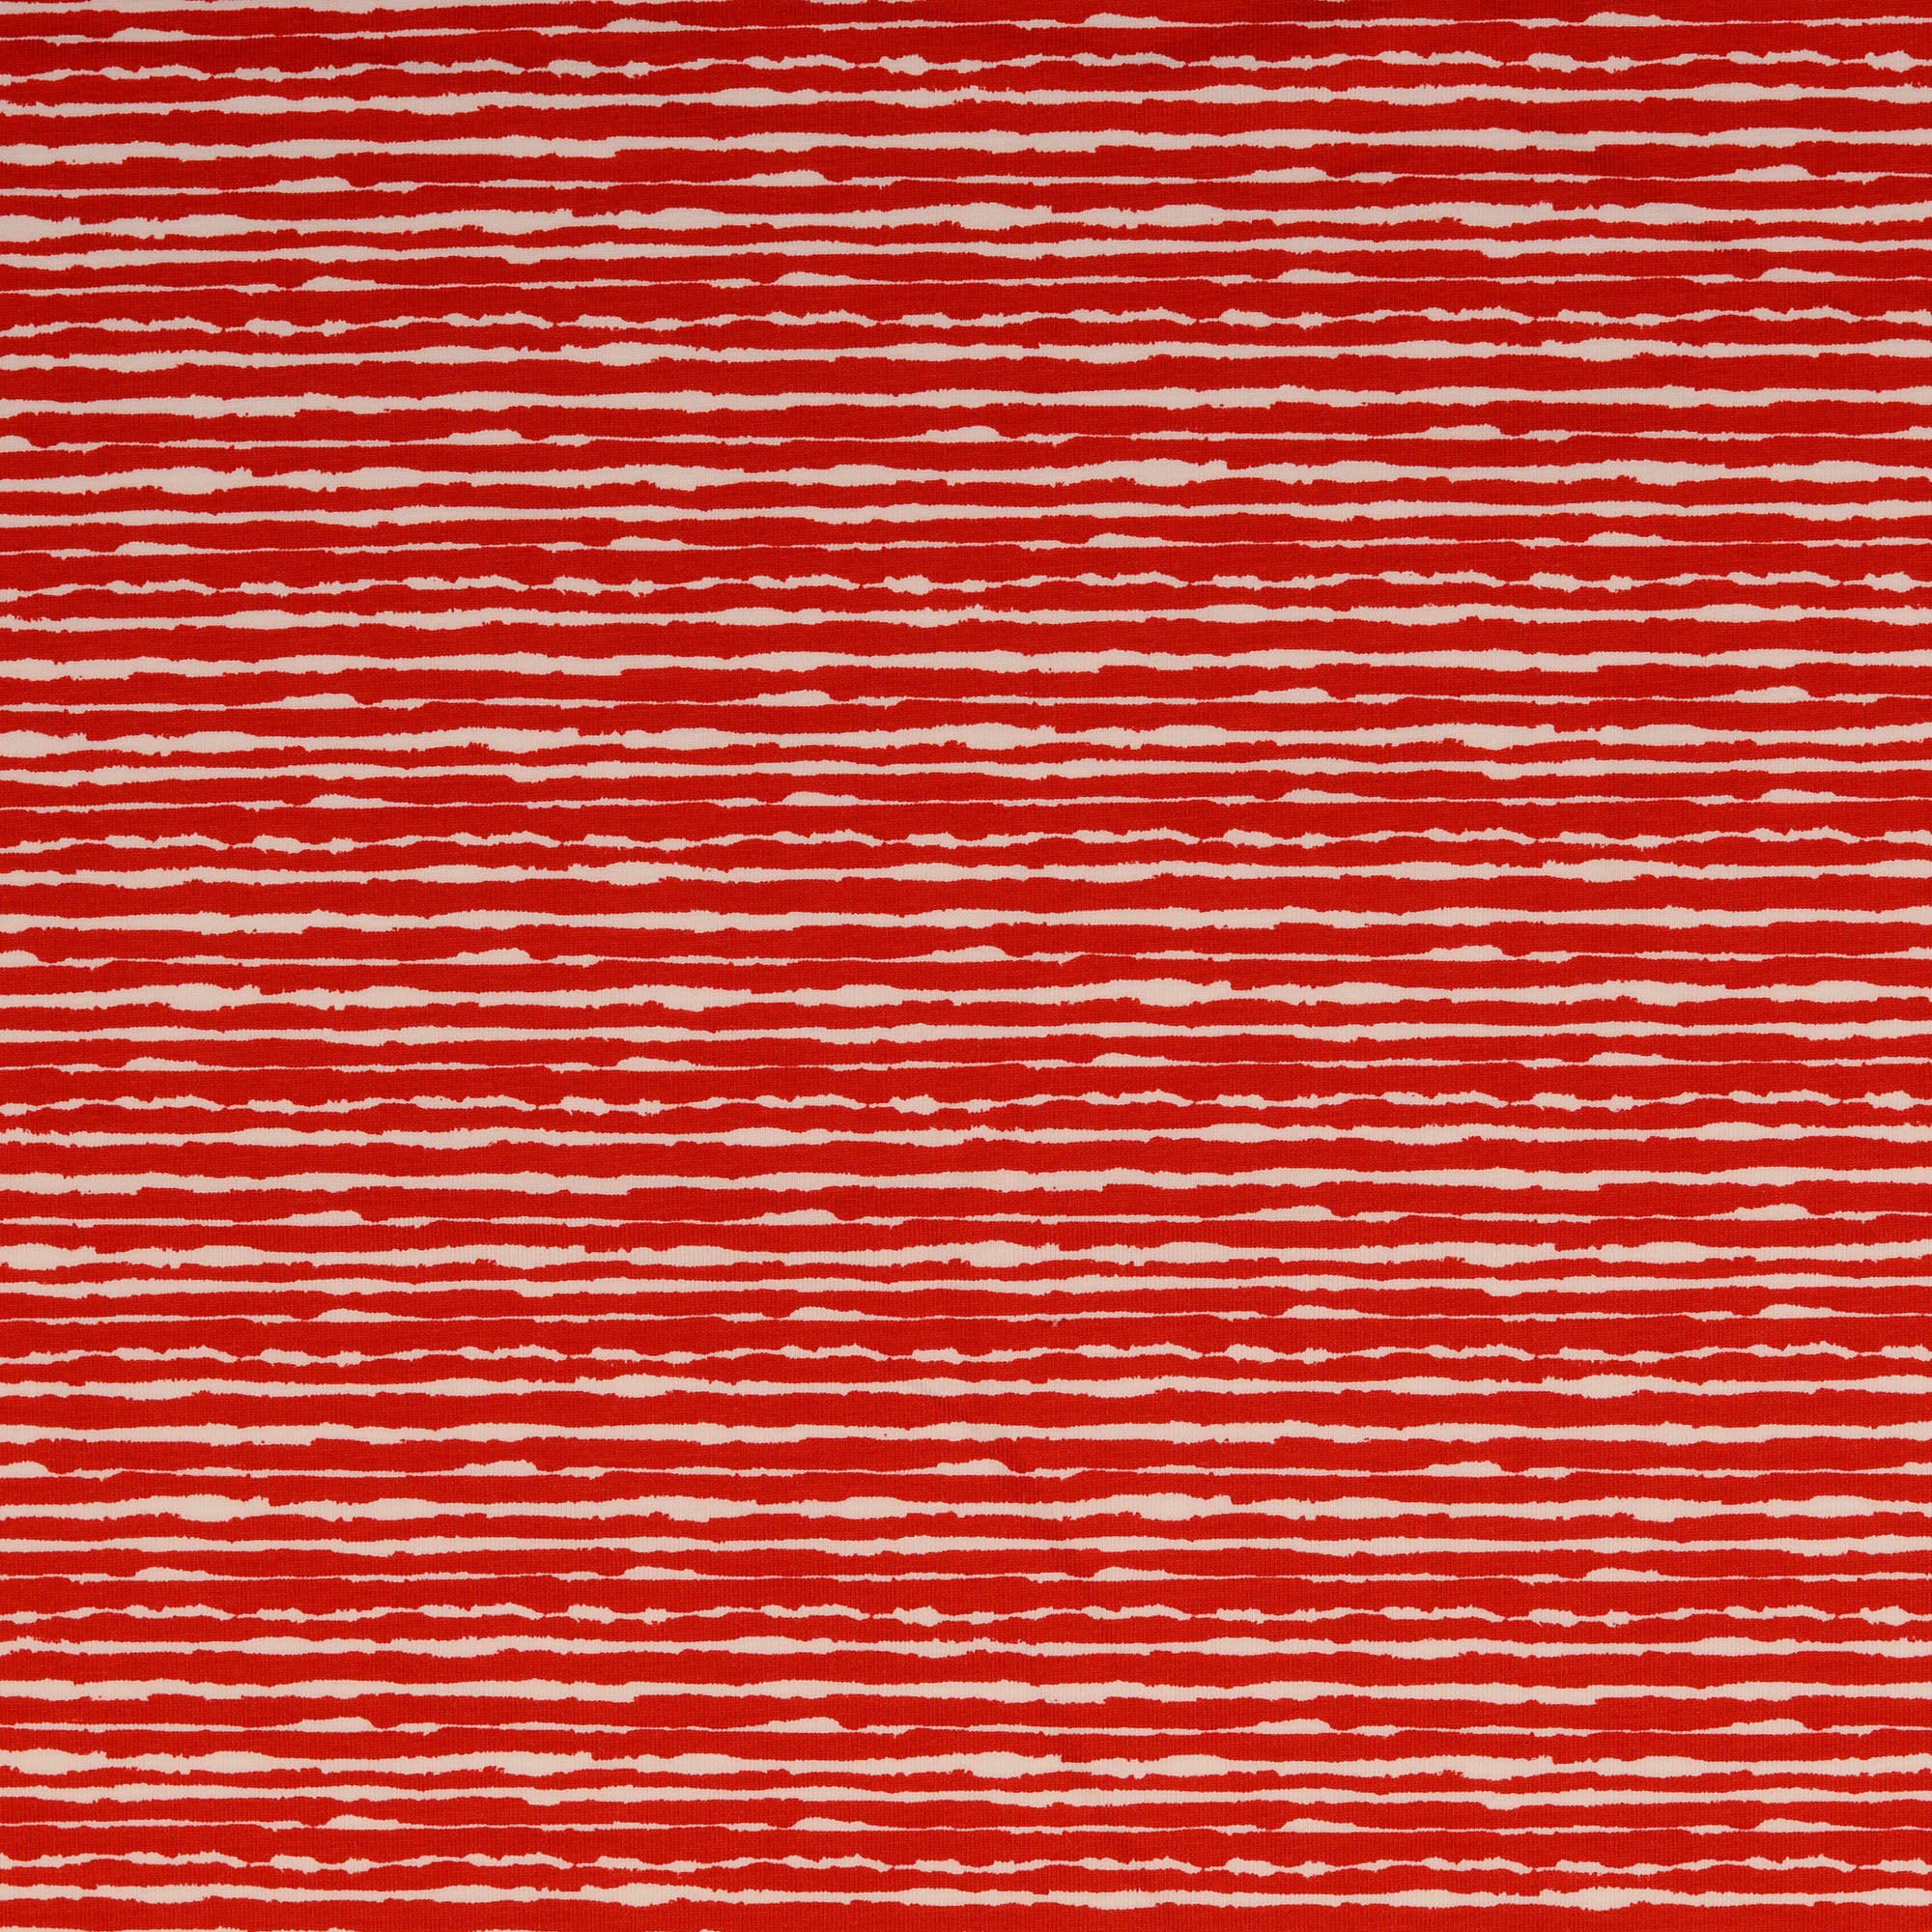 Hazy Stripes Red Cotton Jersey Fabric